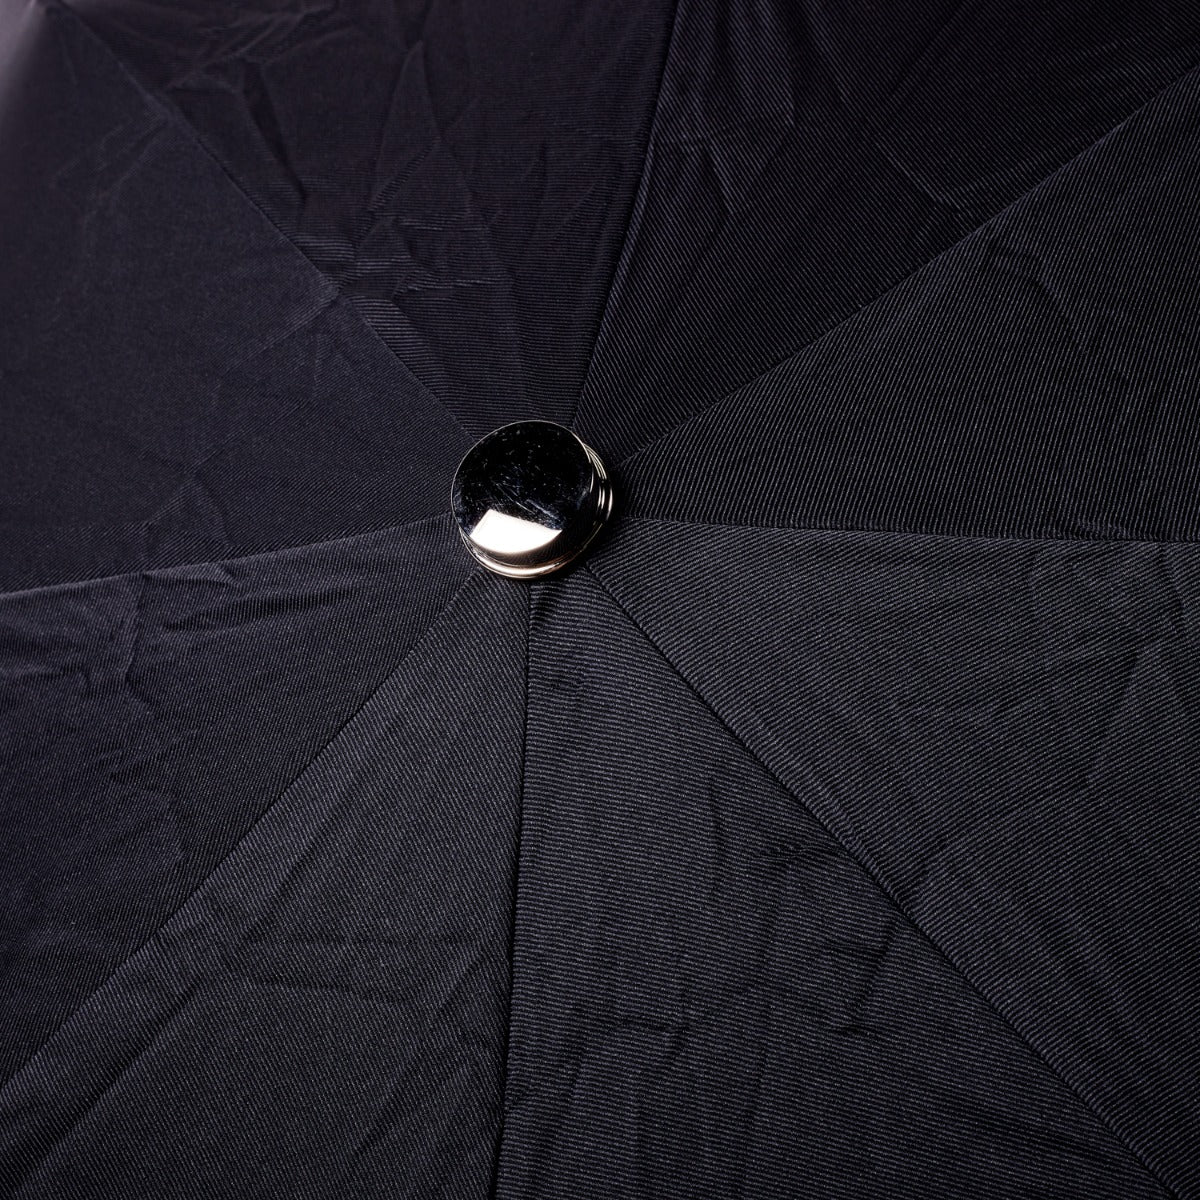 Brown Alligator Travel Umbrella with Black Canopy